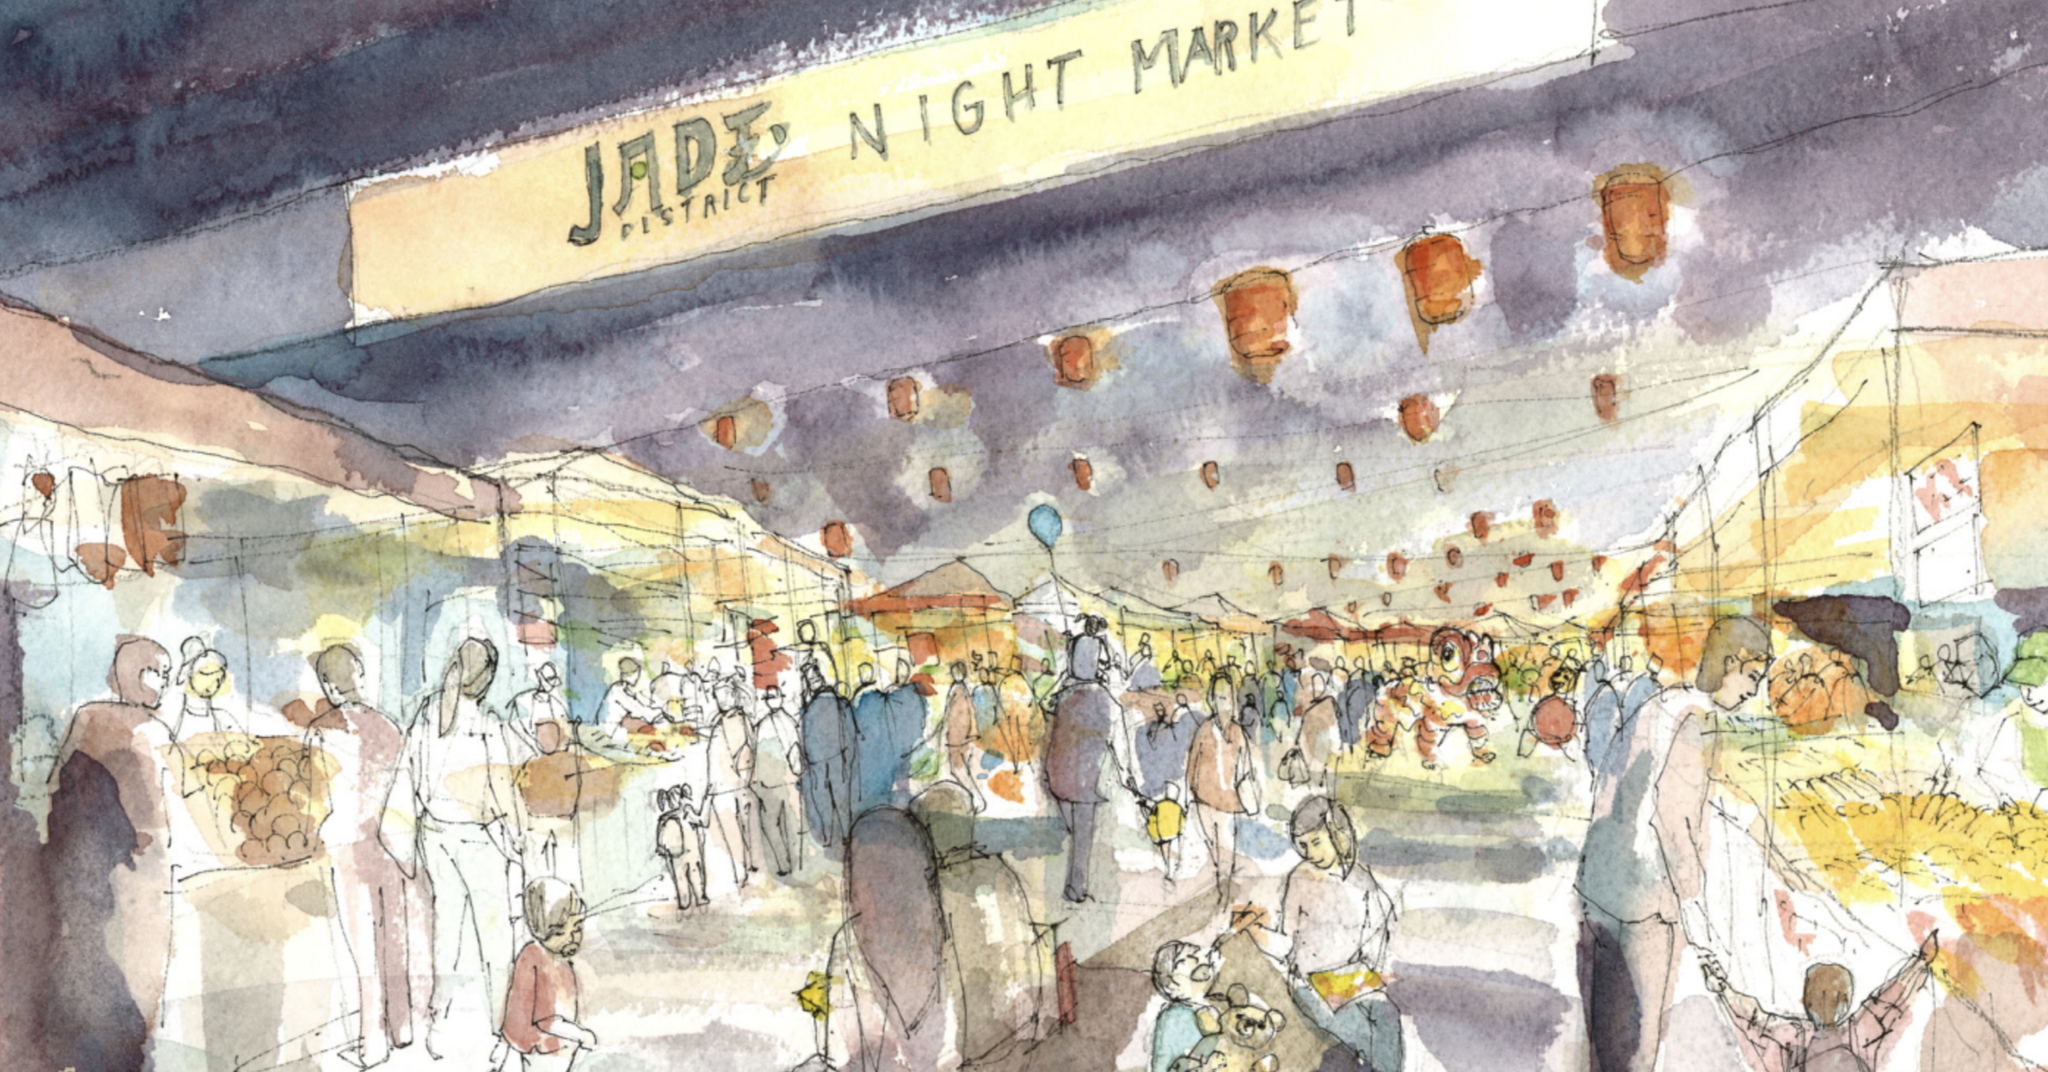 Jade night market.png